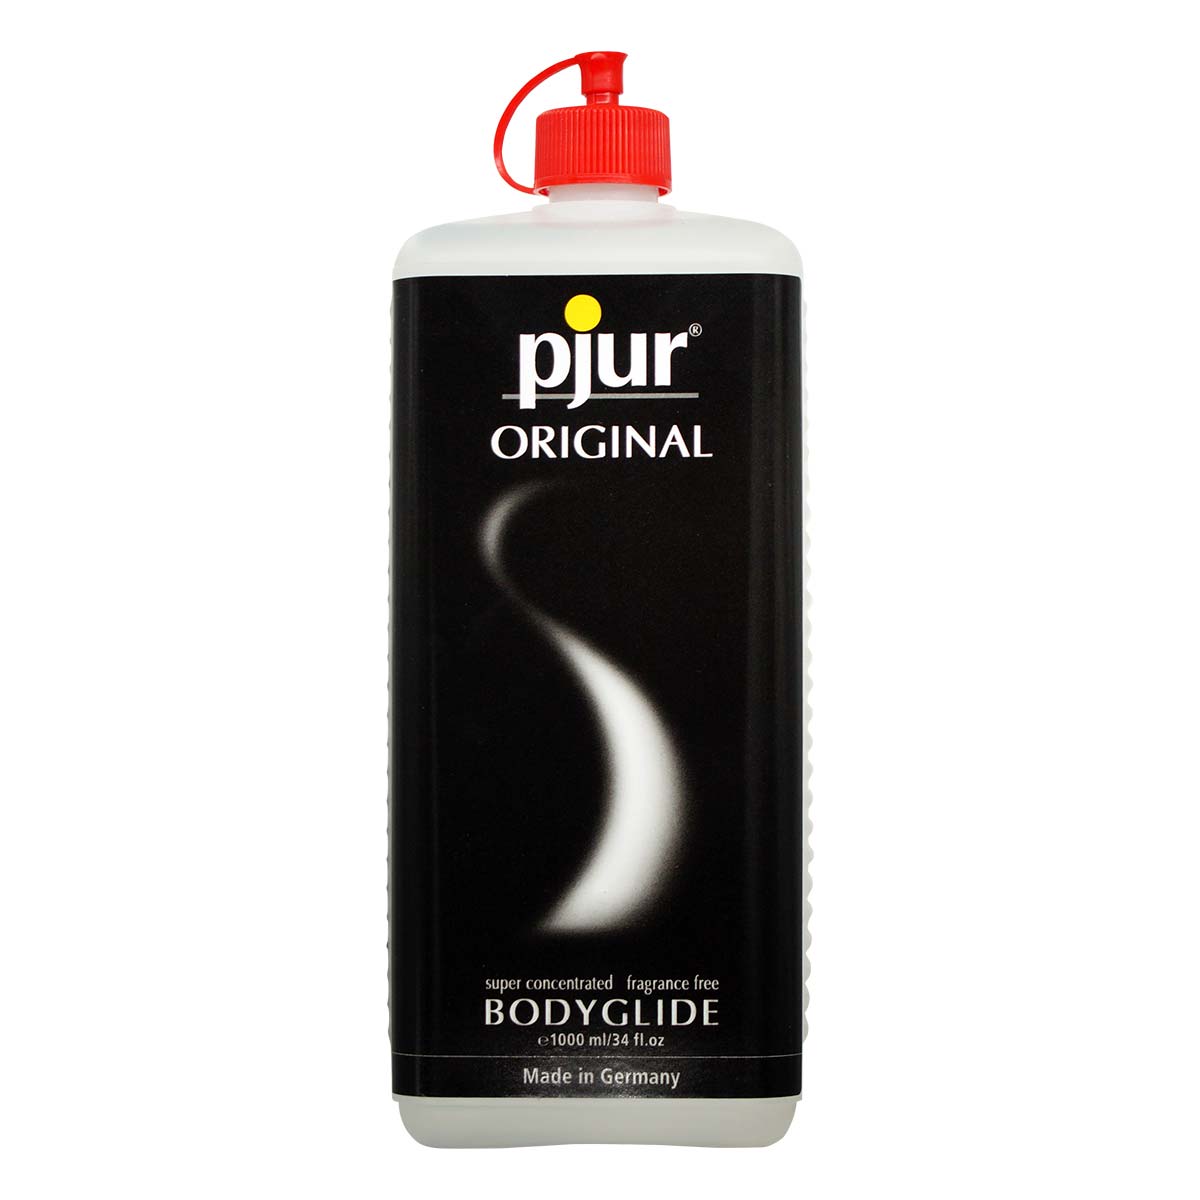 pjur ORIGINAL 1000ml 矽性潤滑劑 - 國際版-p_2